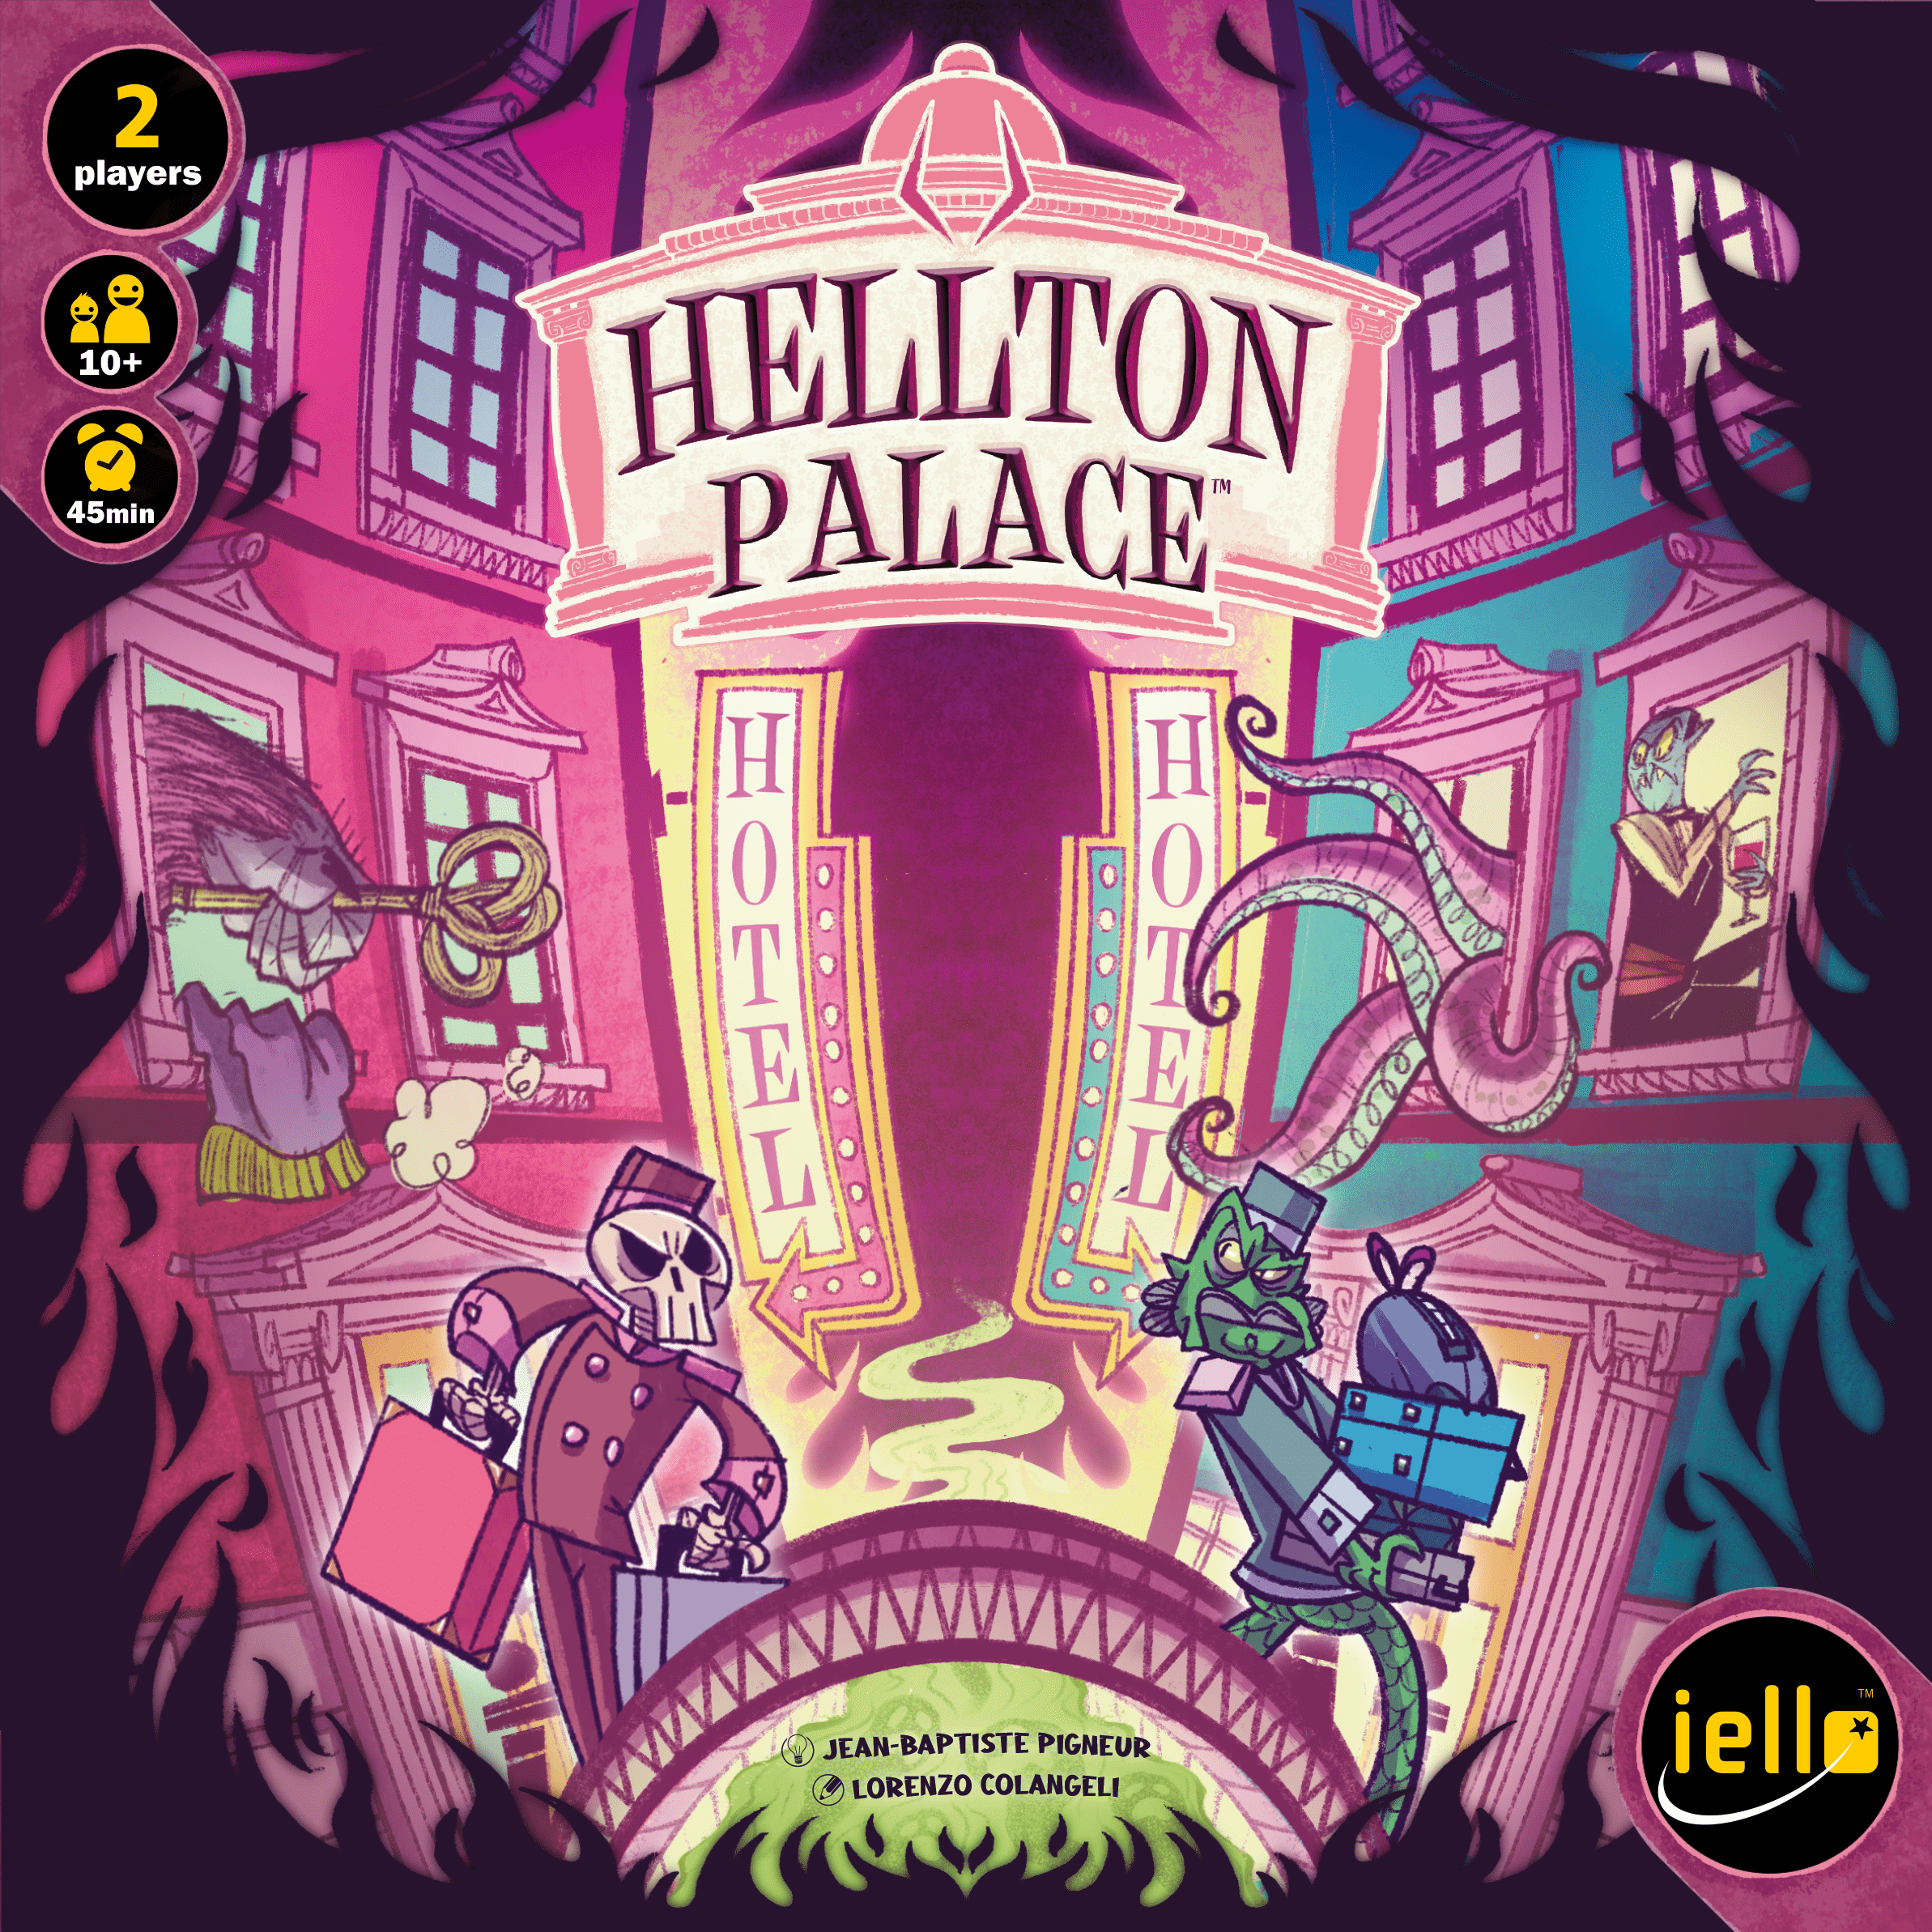 hellton-palace-iello.png